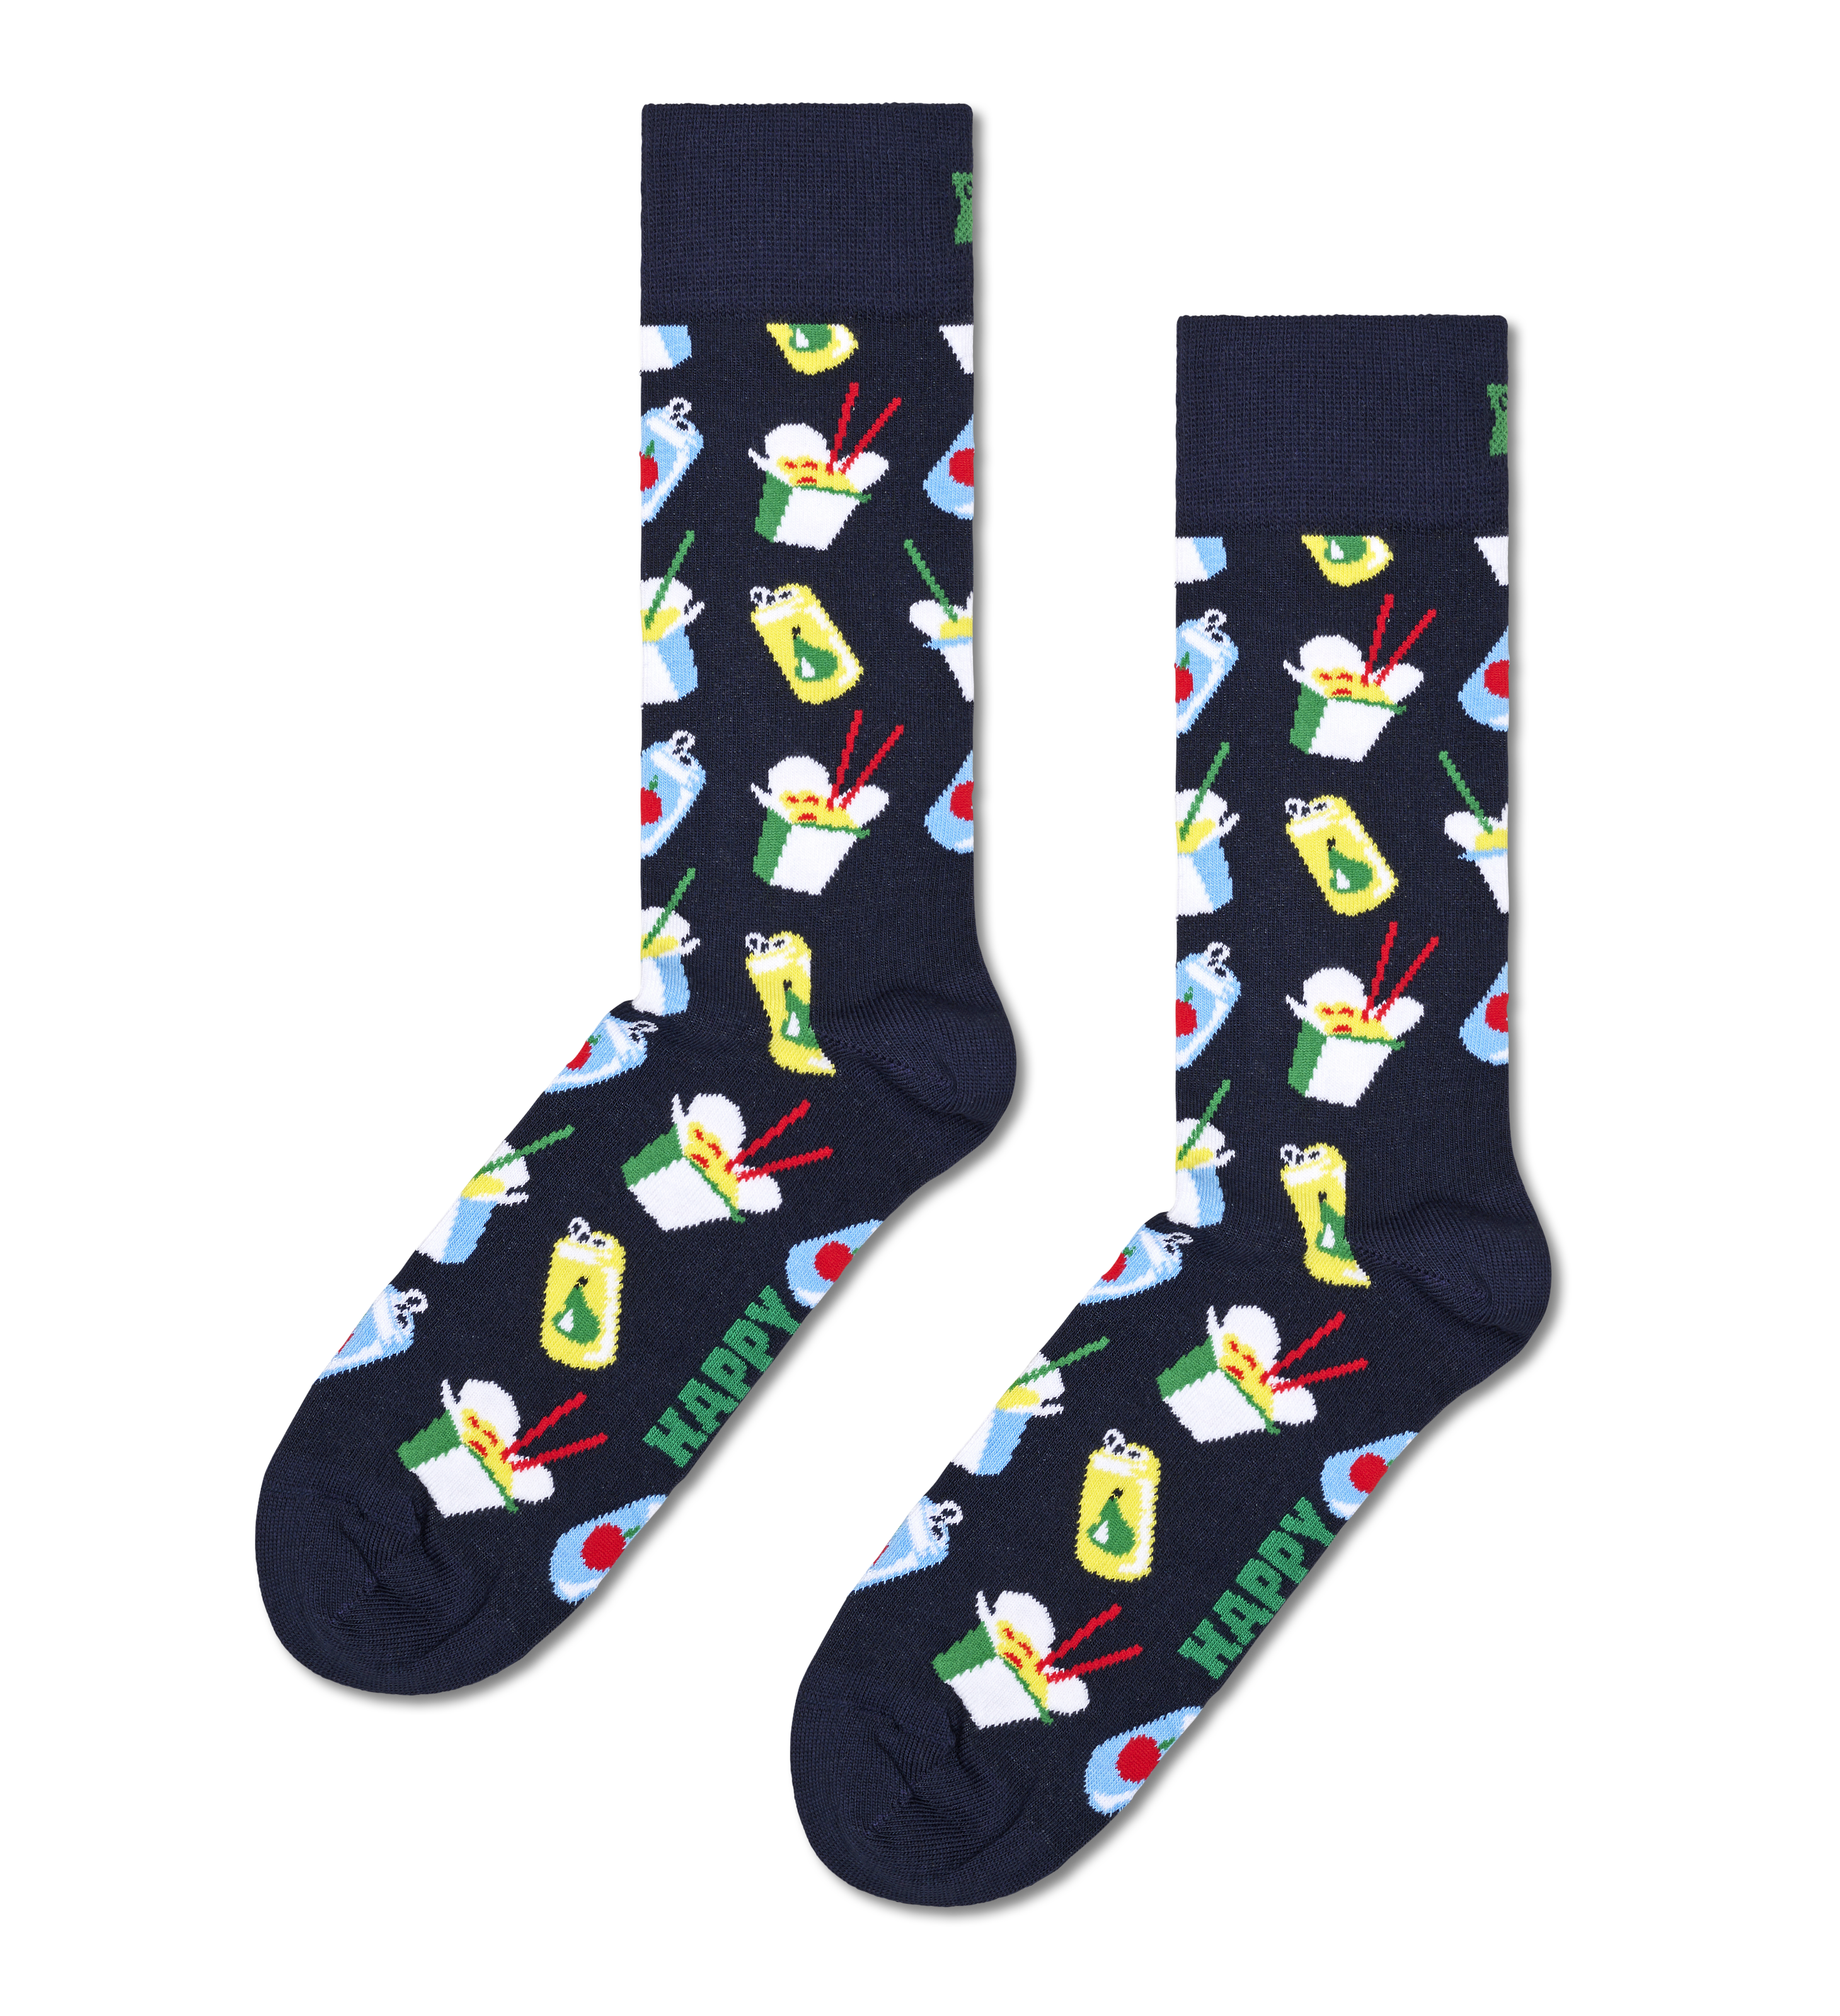 Happy Socks - Wikipedia